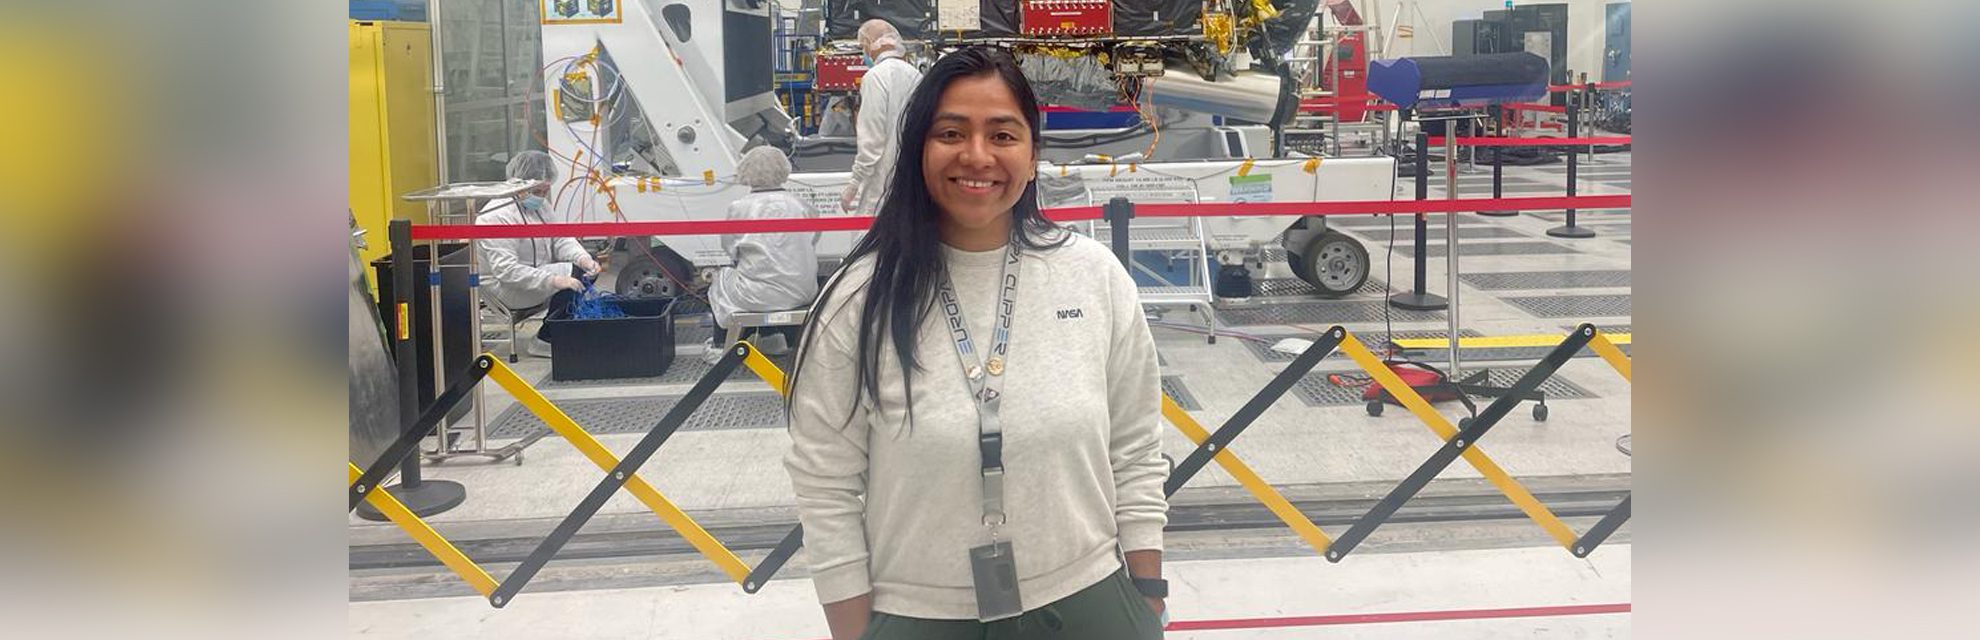 Priyanka Srivastava: วิศวกรอวกาศของ NASA ที่อยู่เบื้องหลังความสำเร็จของ Perseverance Rover ในการลงจอดบนดาวอังคาร